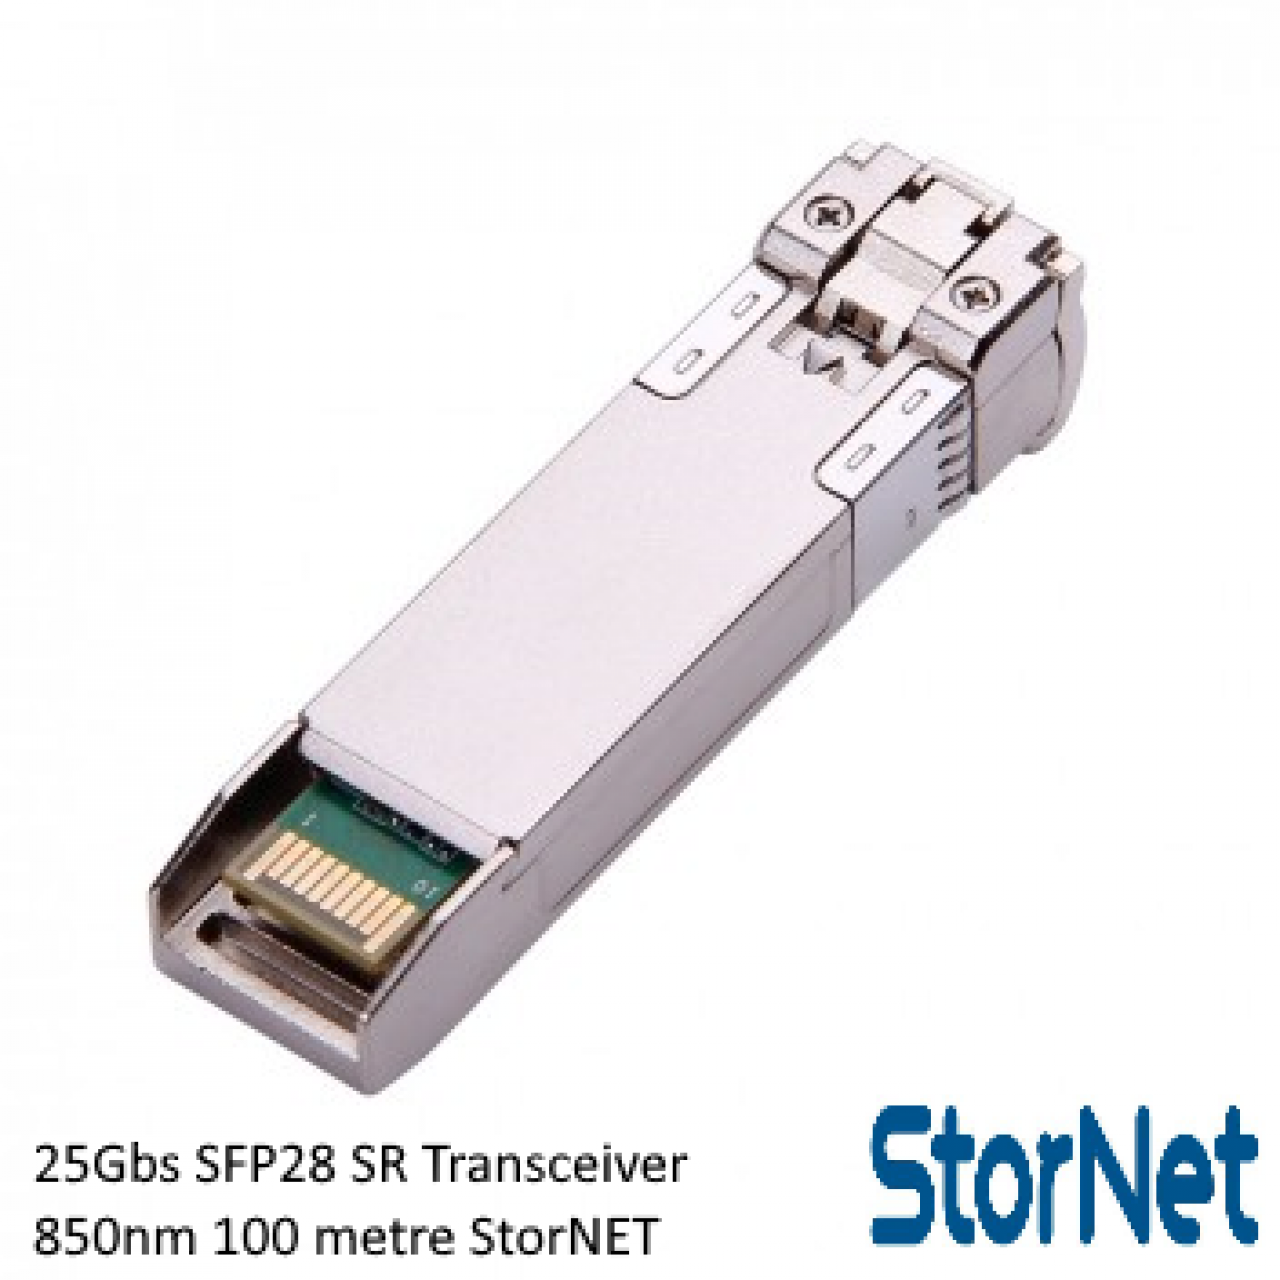 25Gbs SFP28 SR Transceiver  850nm 100 metre StorNET